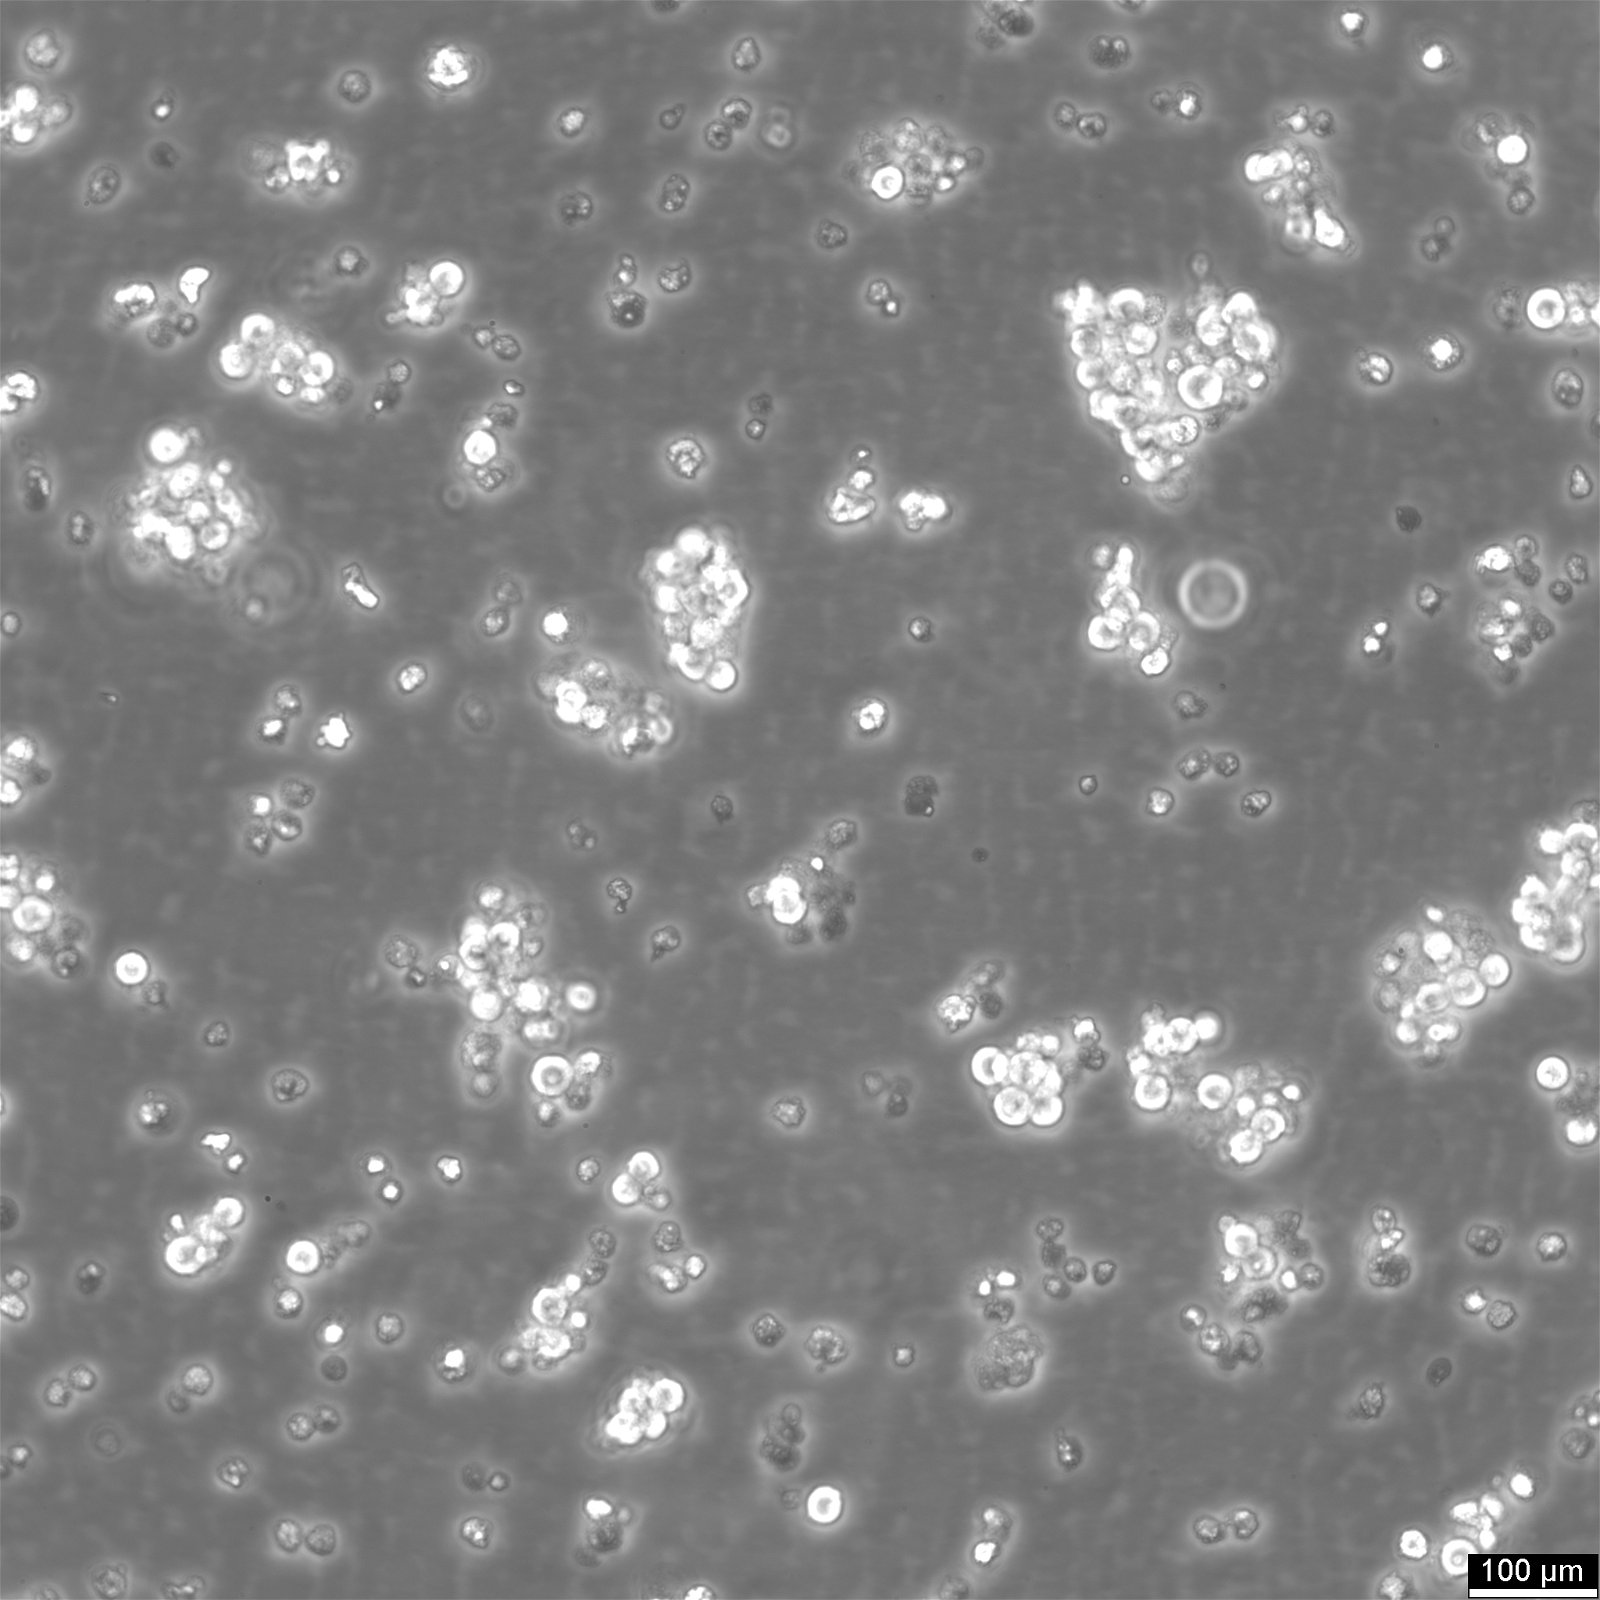 NCI-H524 Cells